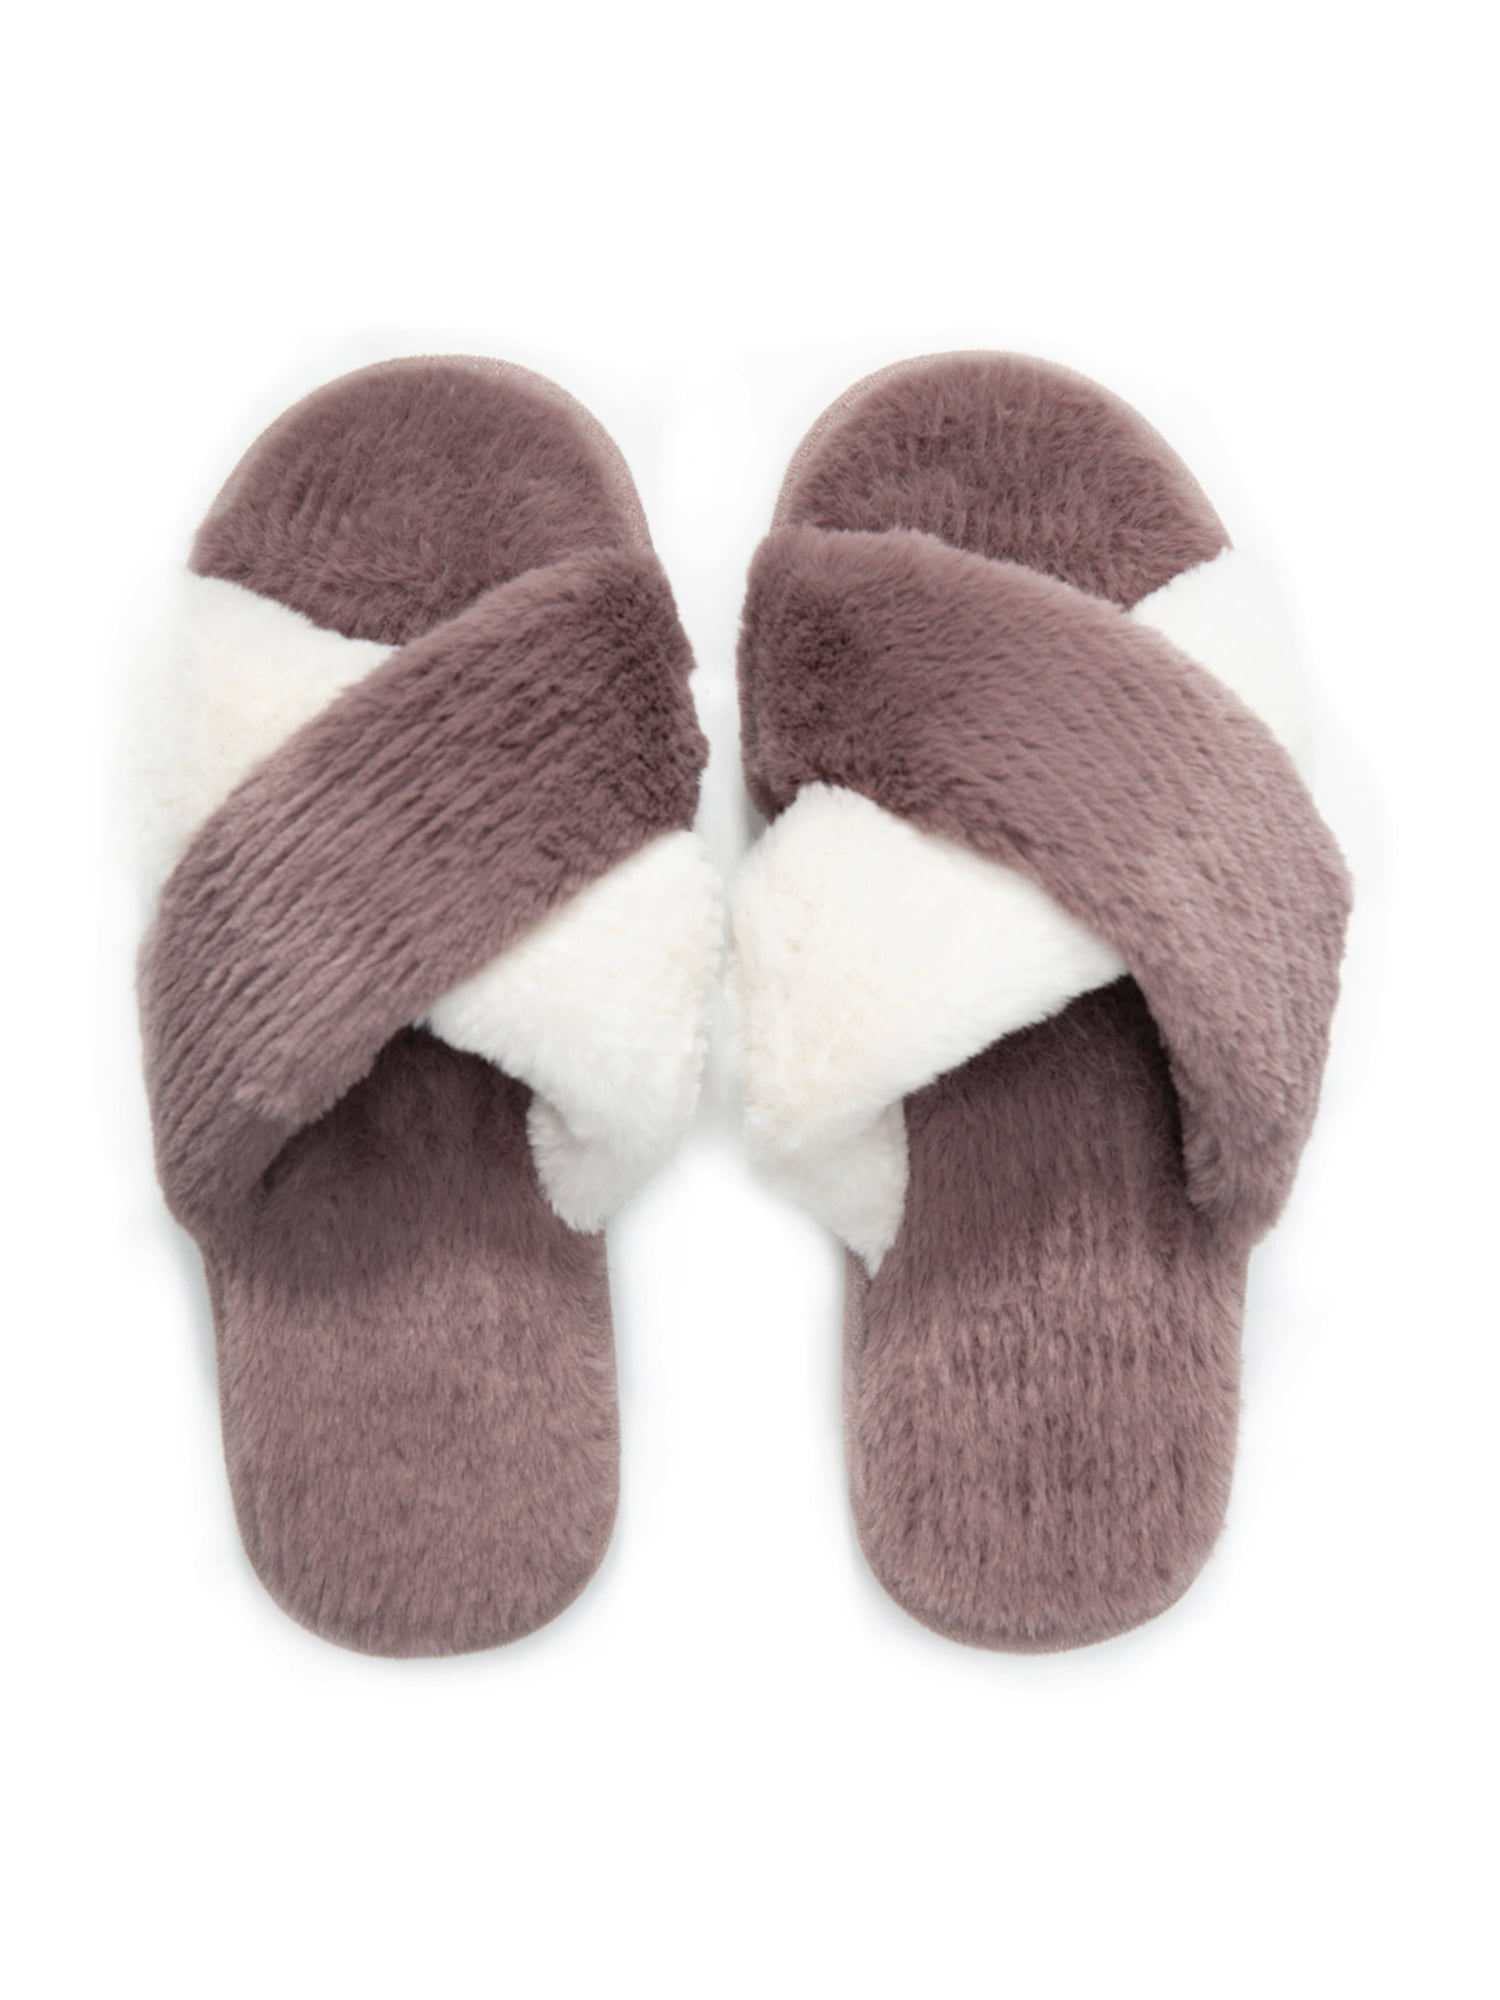 Details about   Women's Indoor Slipper Winter Warm Comfy Flat Shoes Home Soft Elegant Footwears